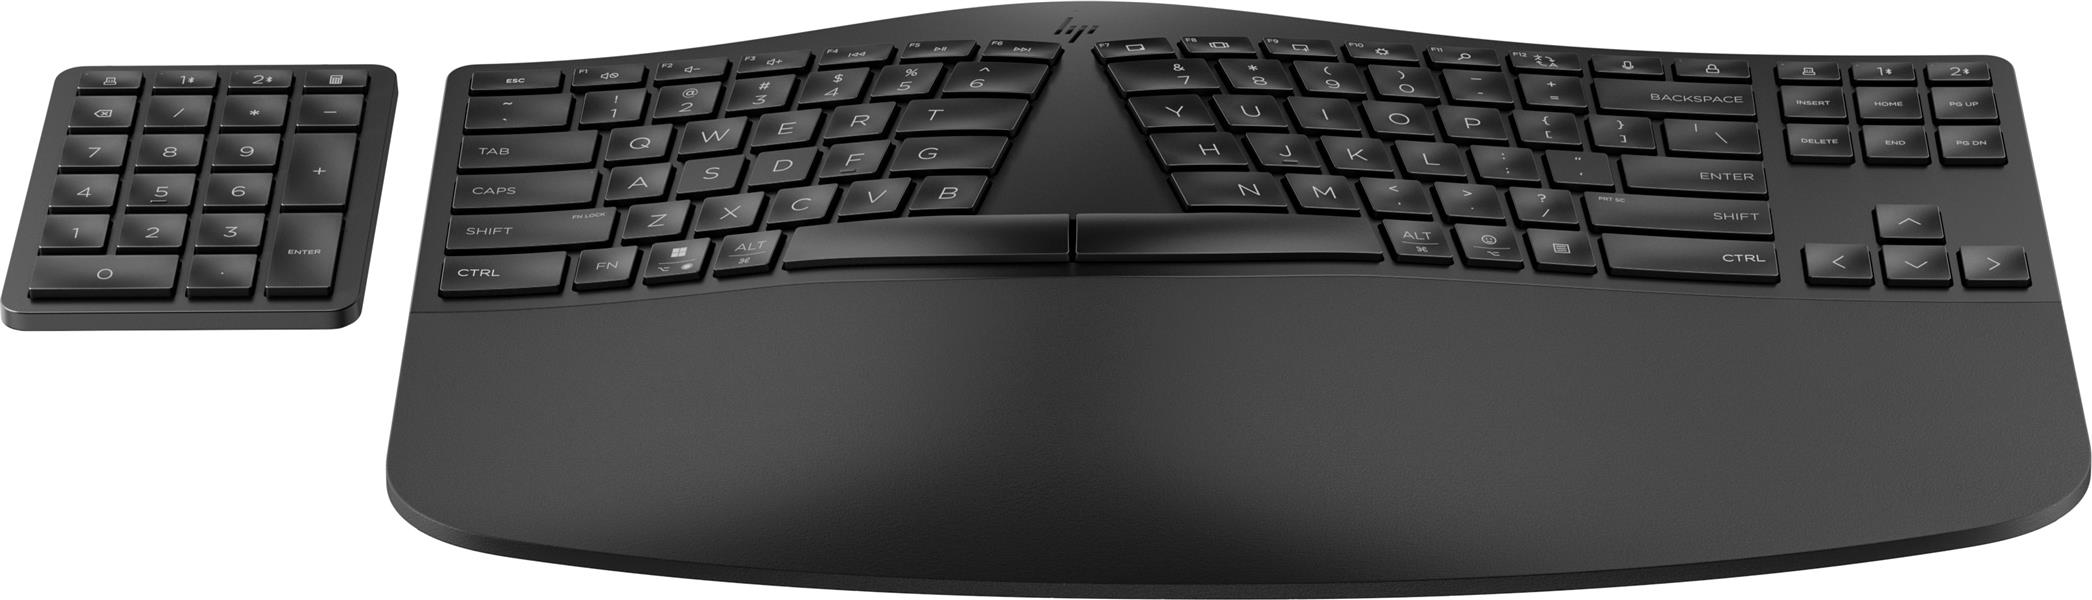 HP 965 Ergonomic Wireless Keyboard